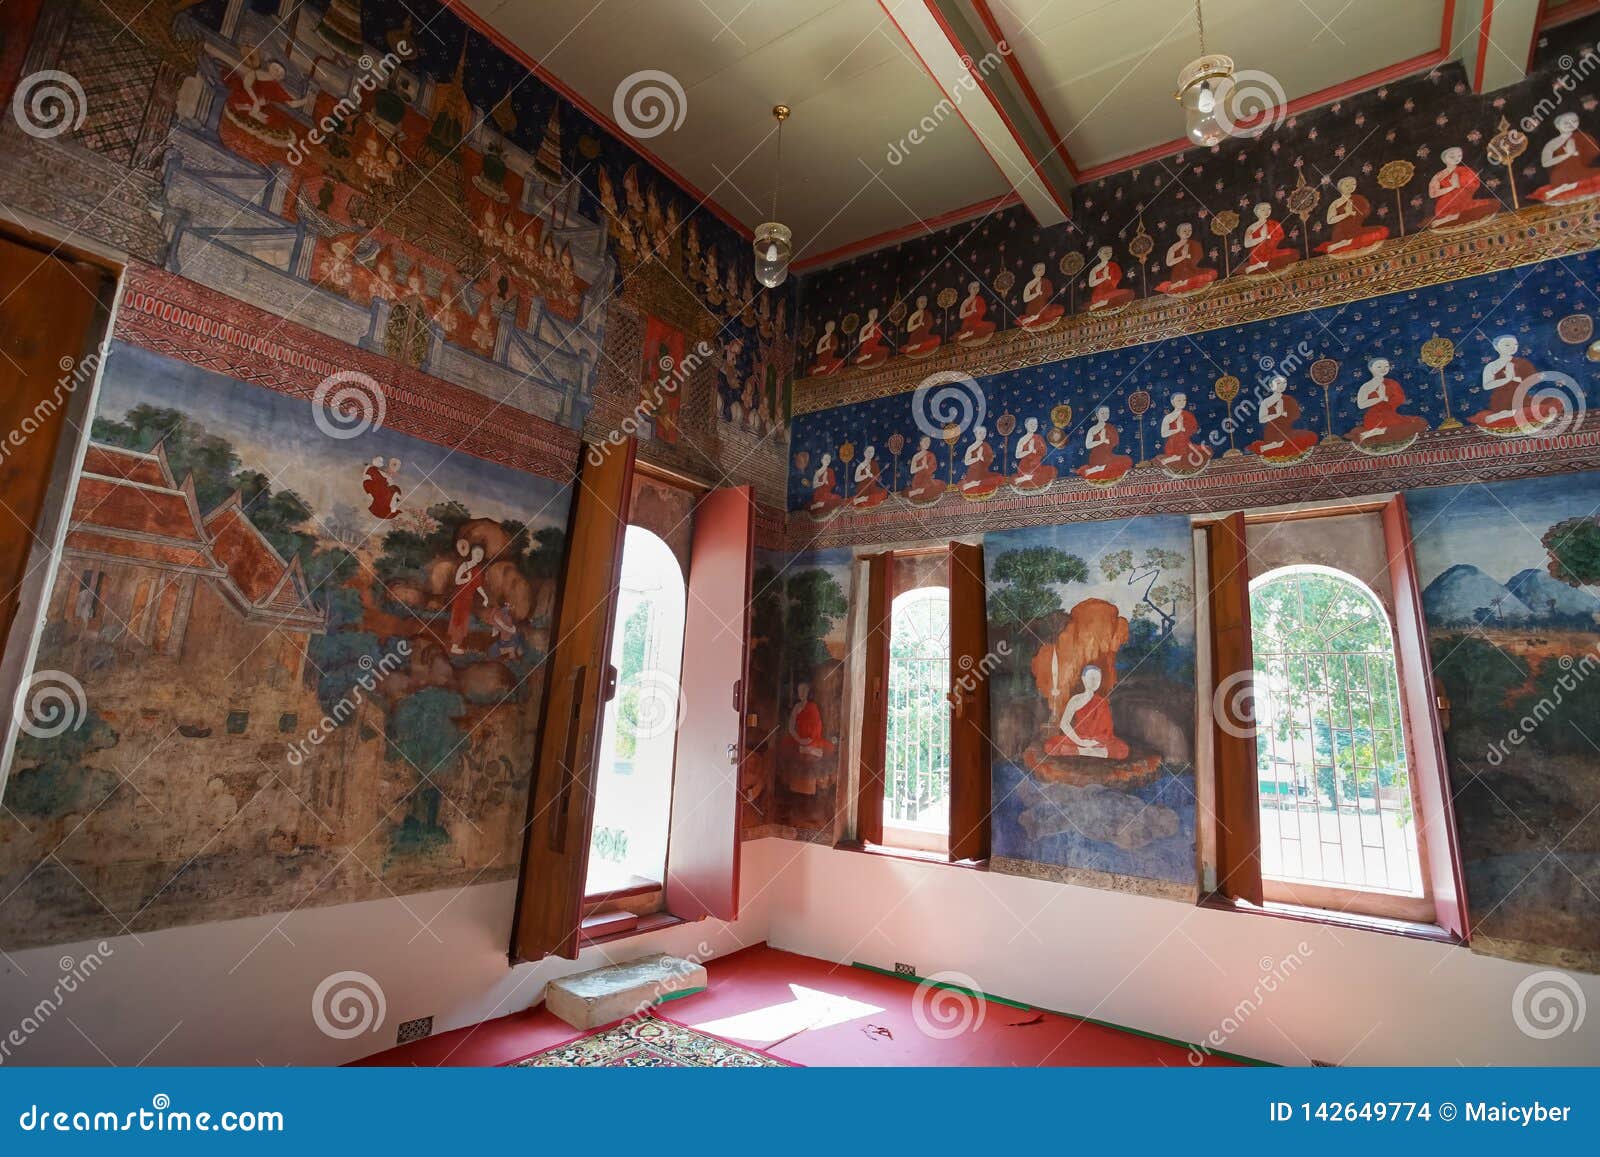 The Famous Beautiful Wall Murals In Wat Ubosatharam In Uthai Thani